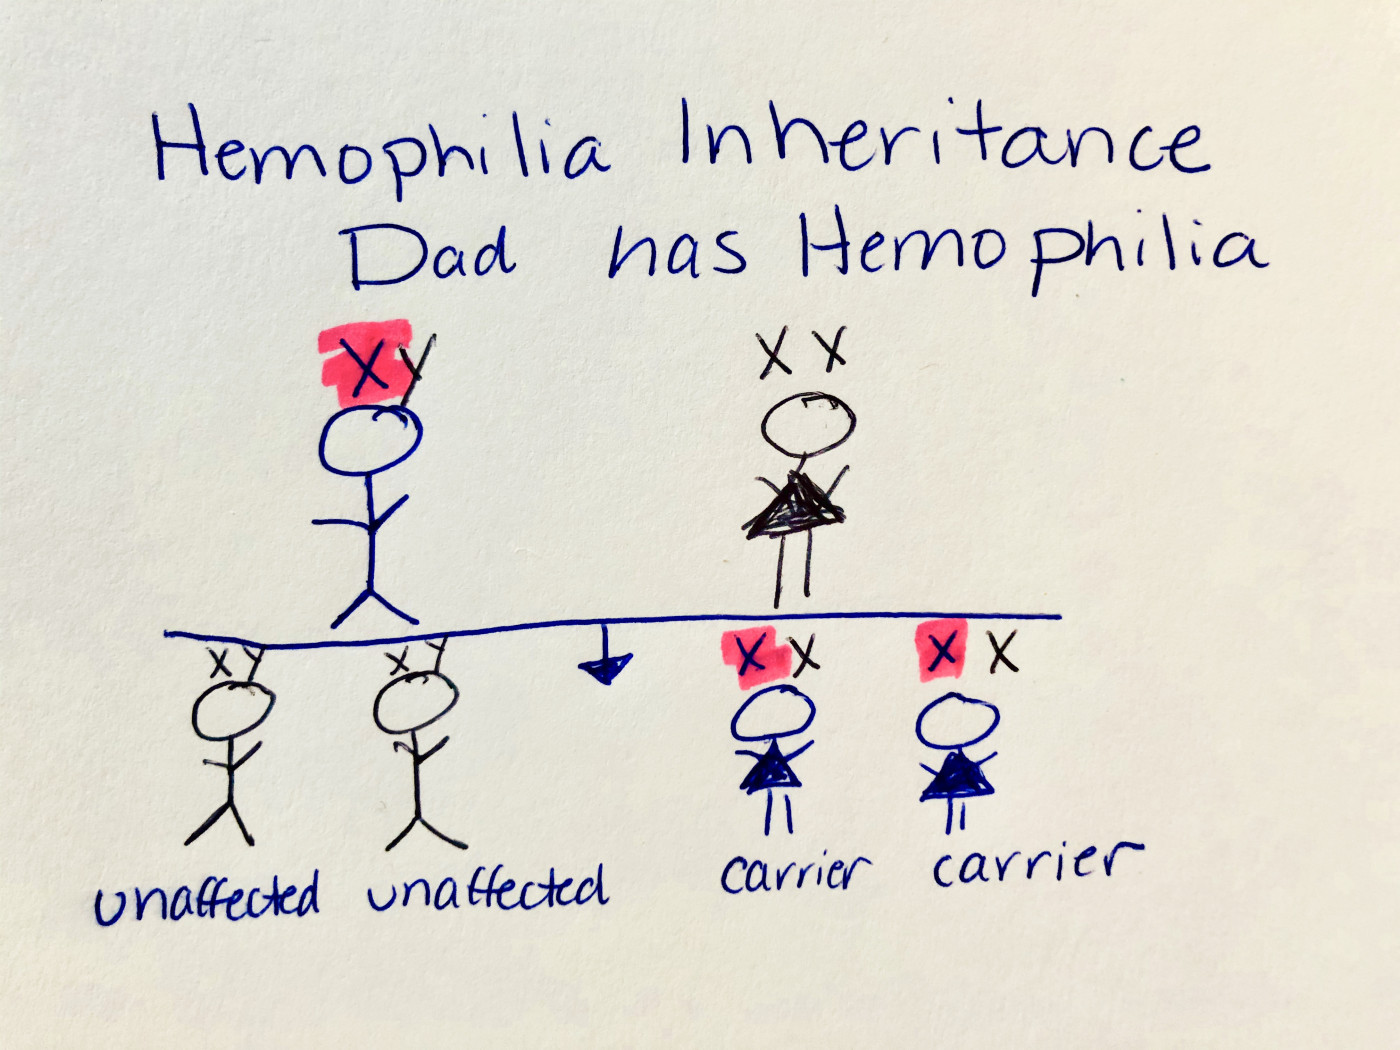 how common is hemophilia in dogs